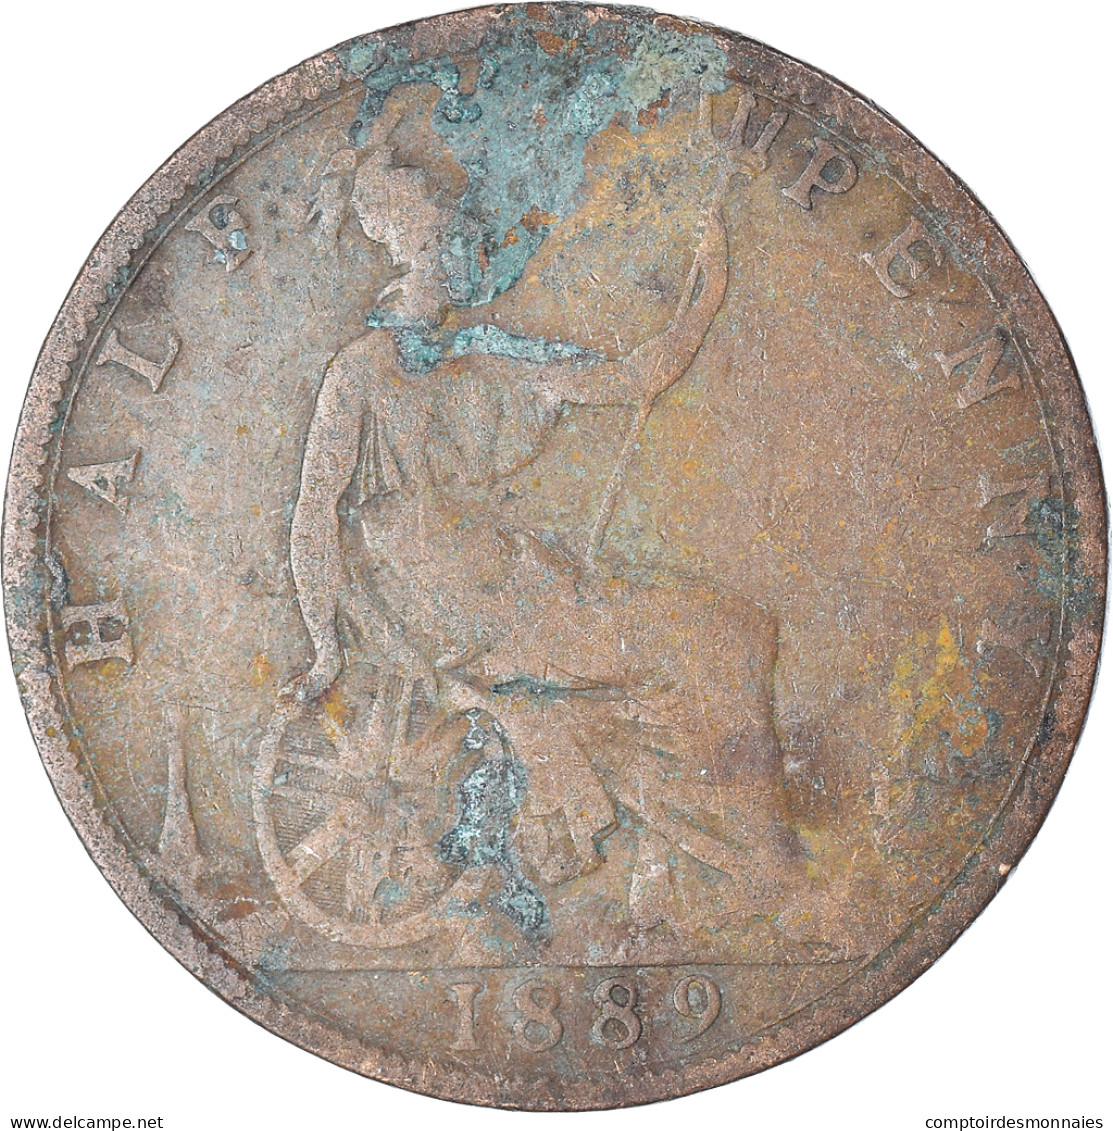 Monnaie, Grande-Bretagne, 1/2 Penny, 1889 - C. 1/2 Penny